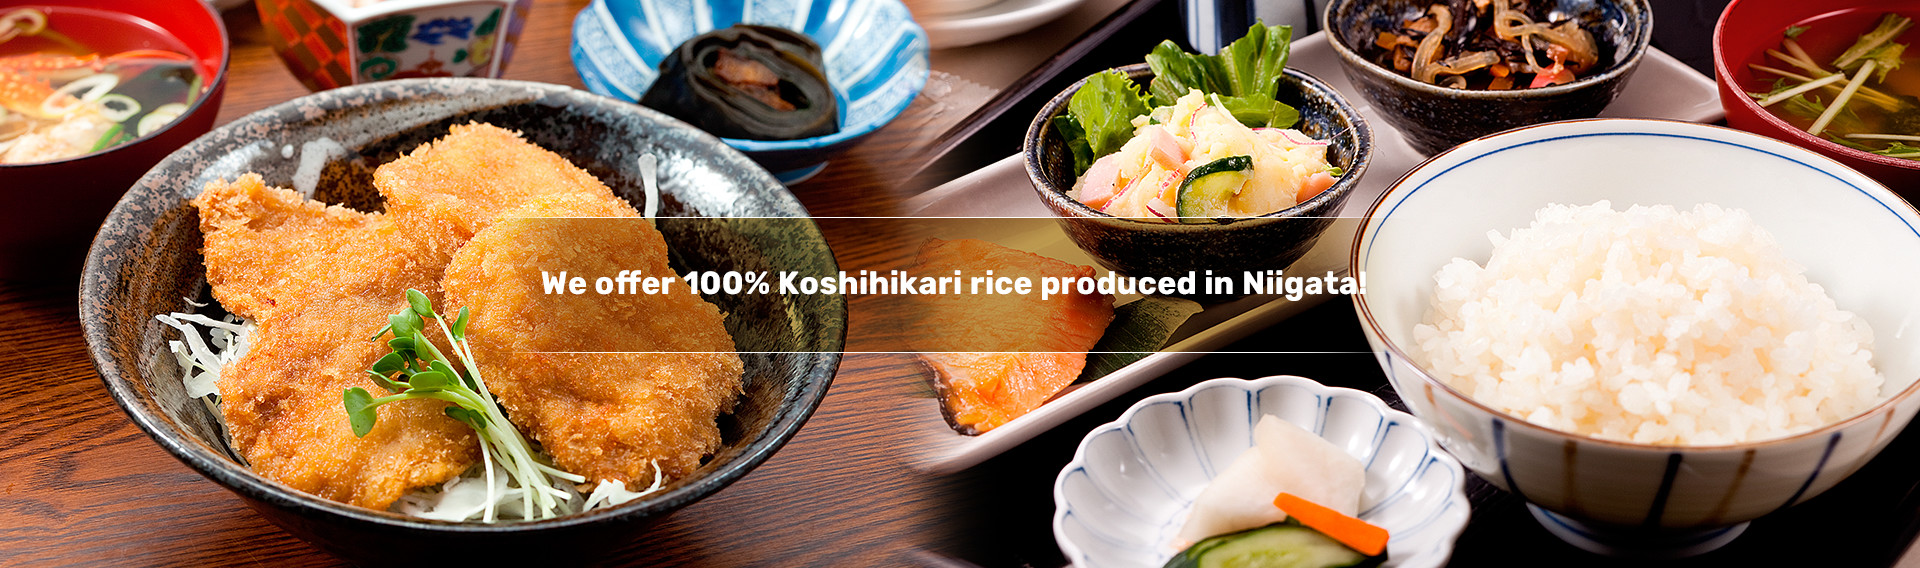 We offer 100% Koshihikari rice produced in Niigata!